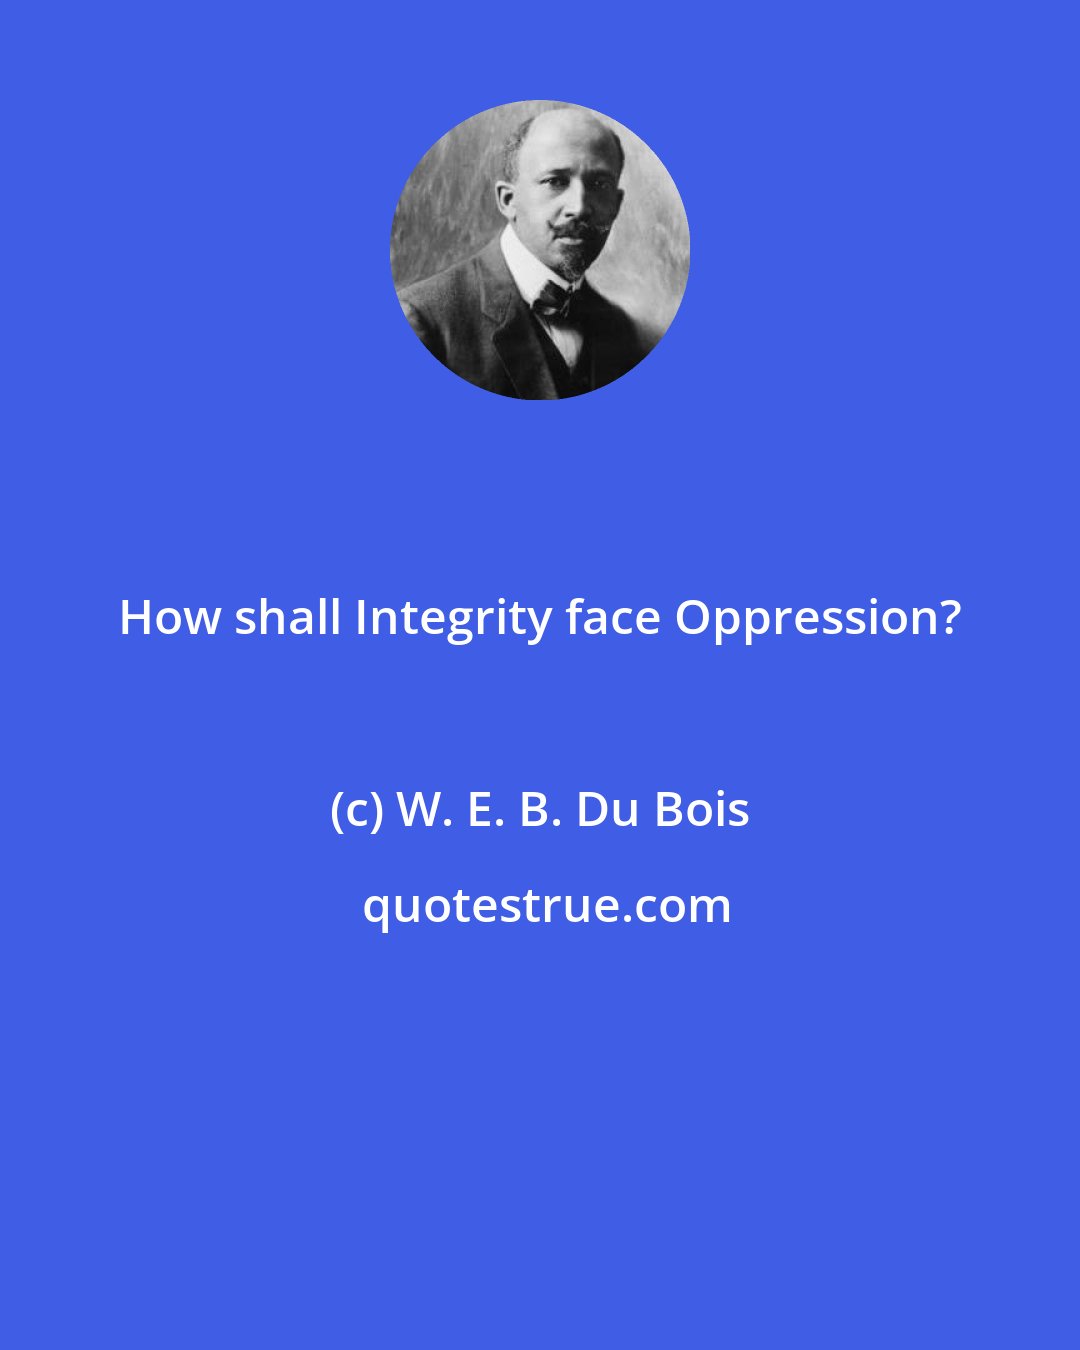 W. E. B. Du Bois: How shall Integrity face Oppression?